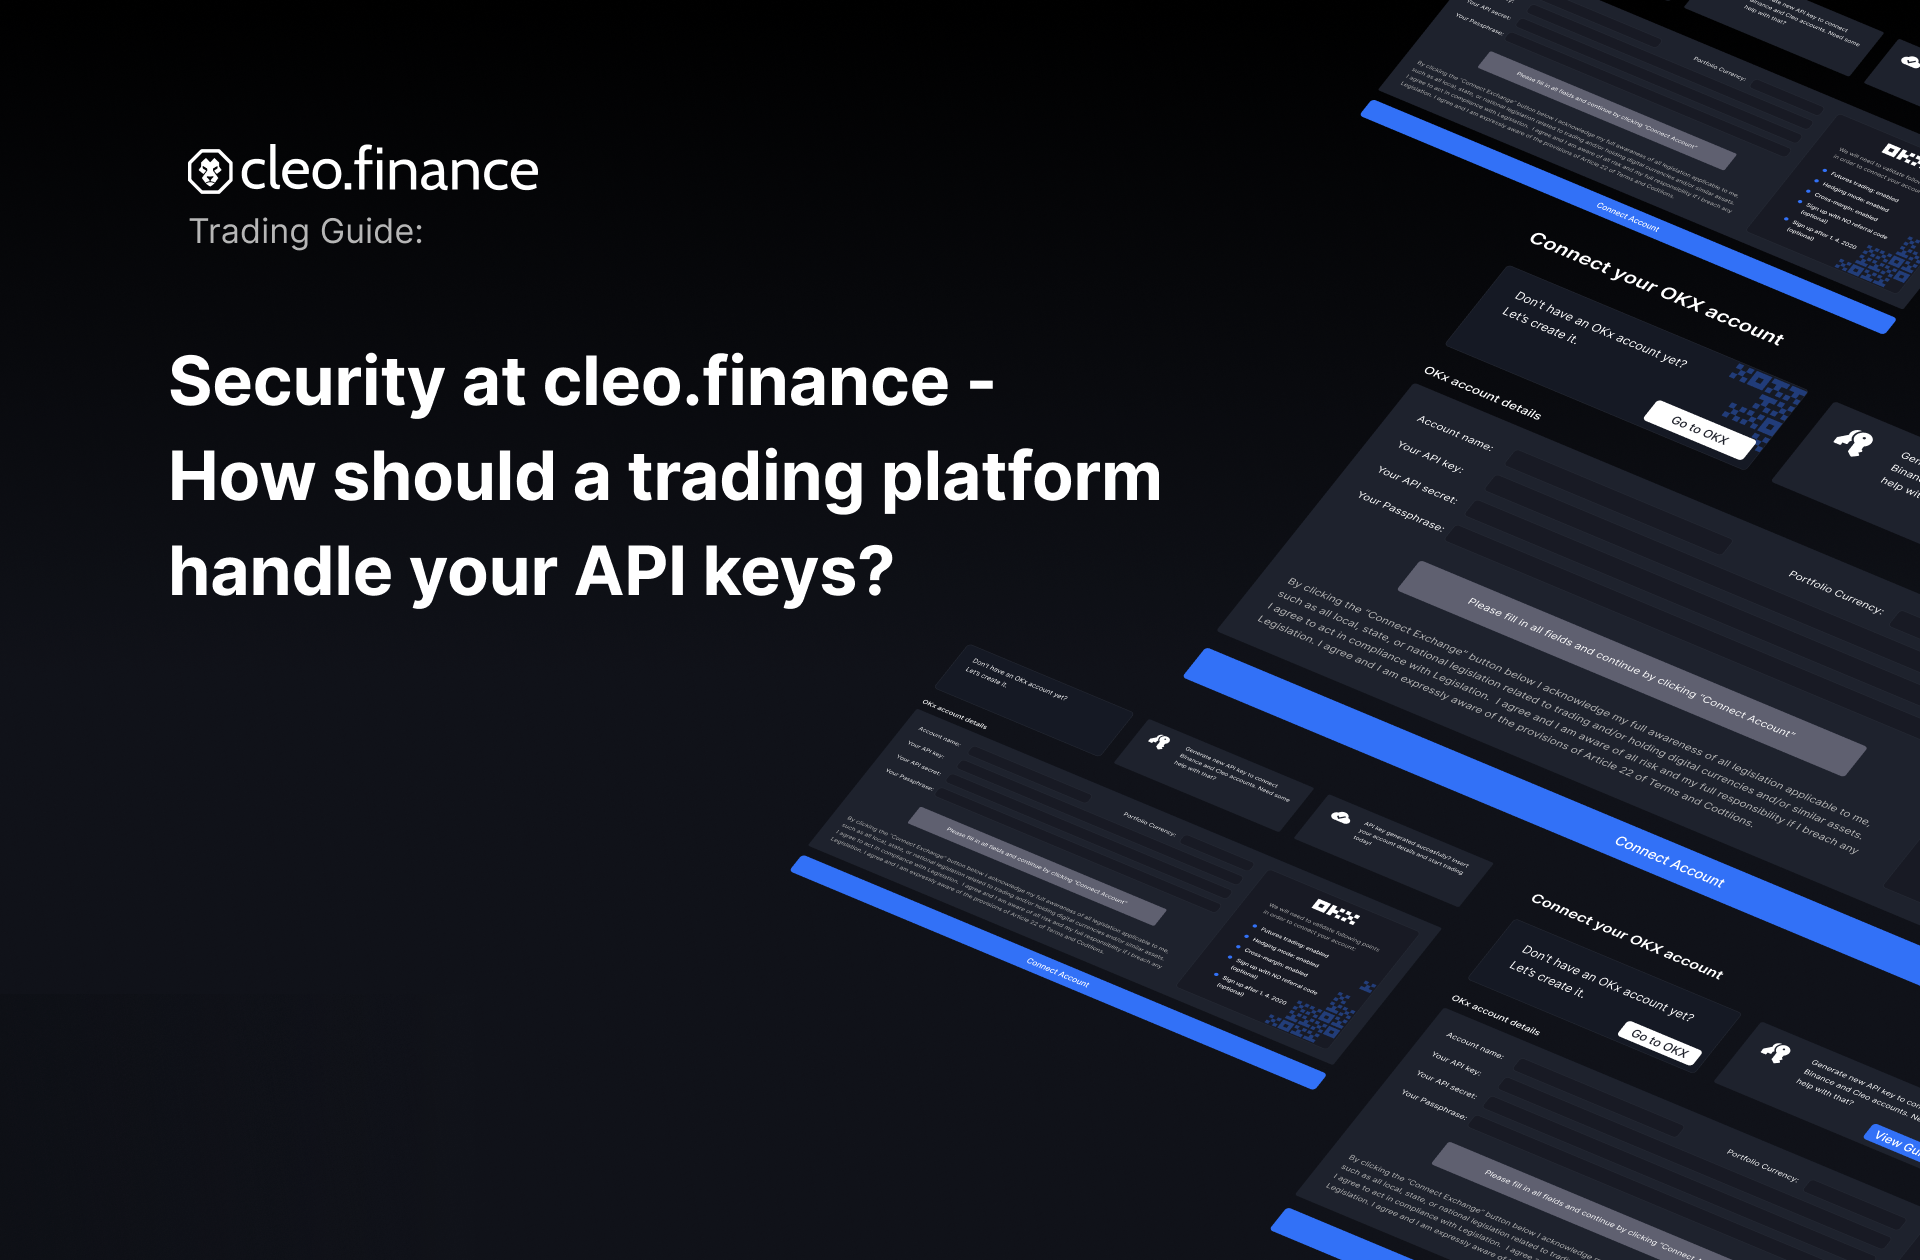 Security at cleo.finance - How should a trading platform handle your API keys?